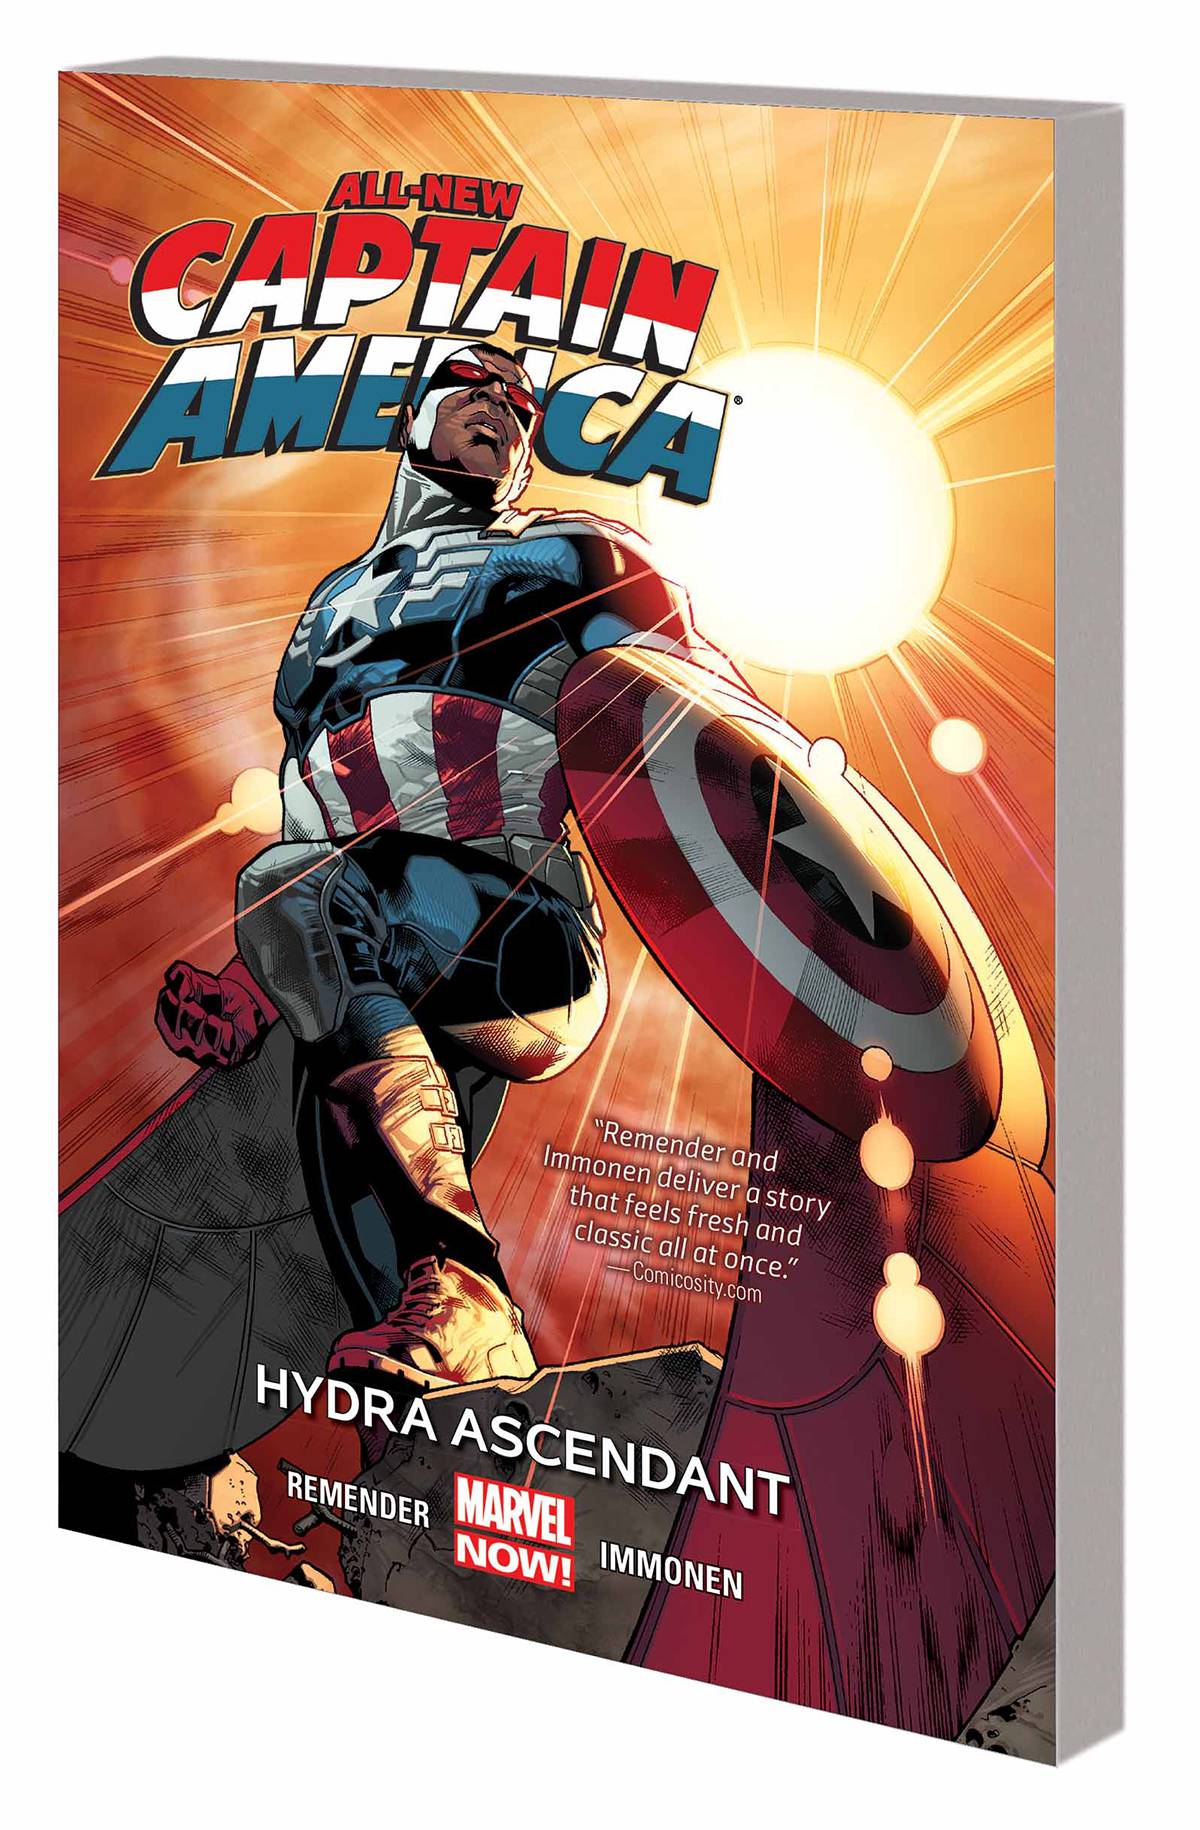 All New Captain America Graphic Novel Volume 1 Hydra Ascendant